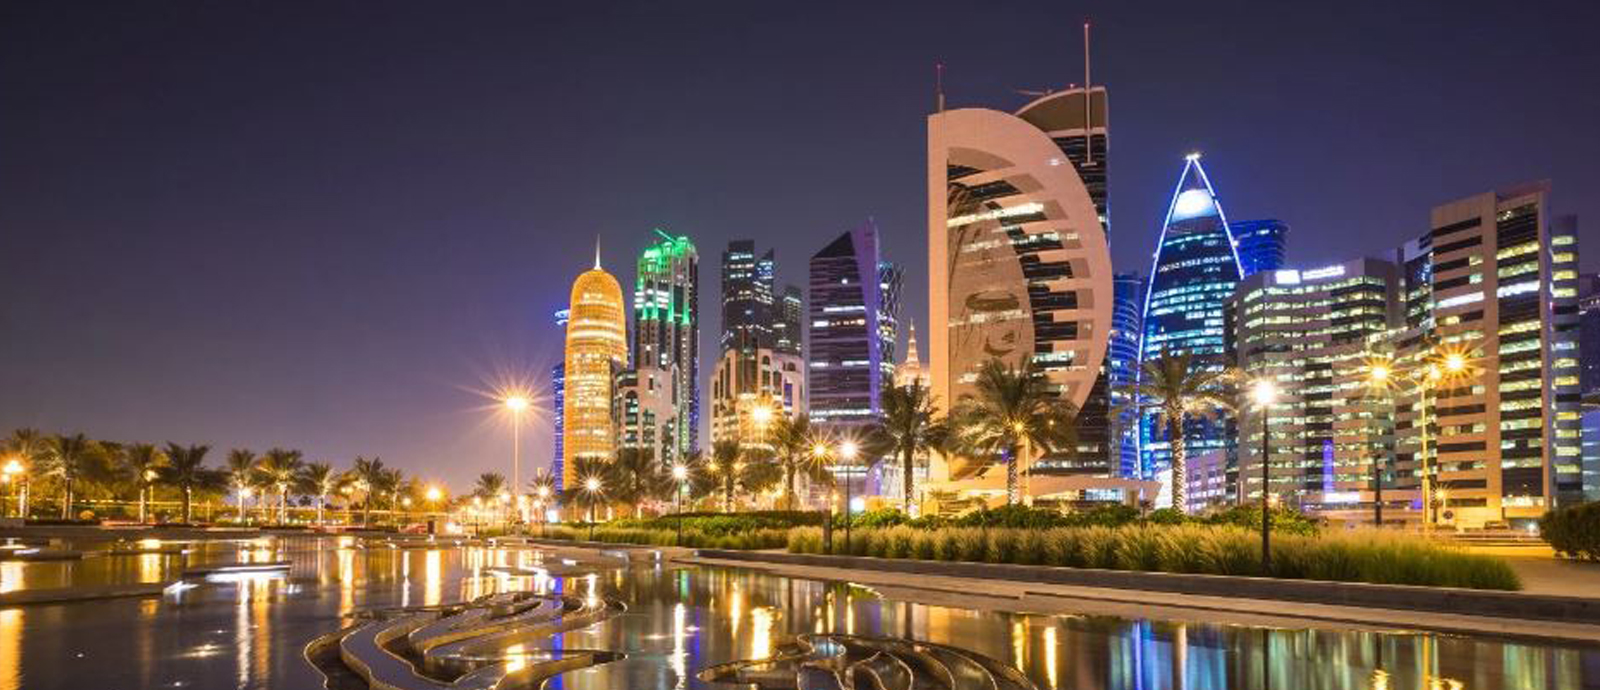 SC launches Qatar Media Portal ahead of FIFA World Cup 2022